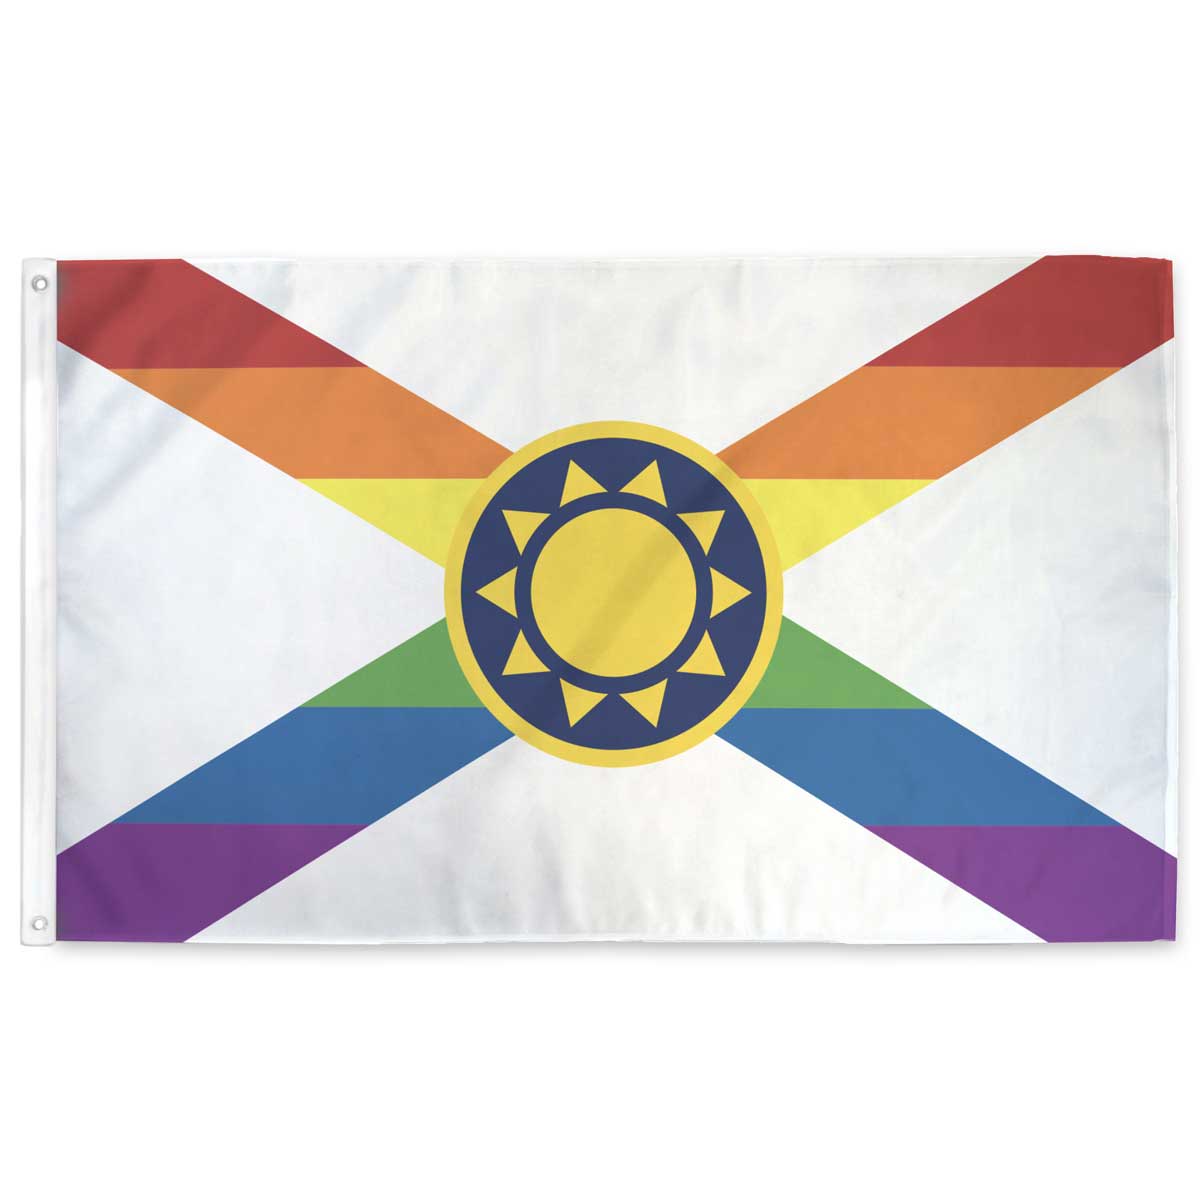 Florida rainbow pride flag measuring 3 by 5 feet